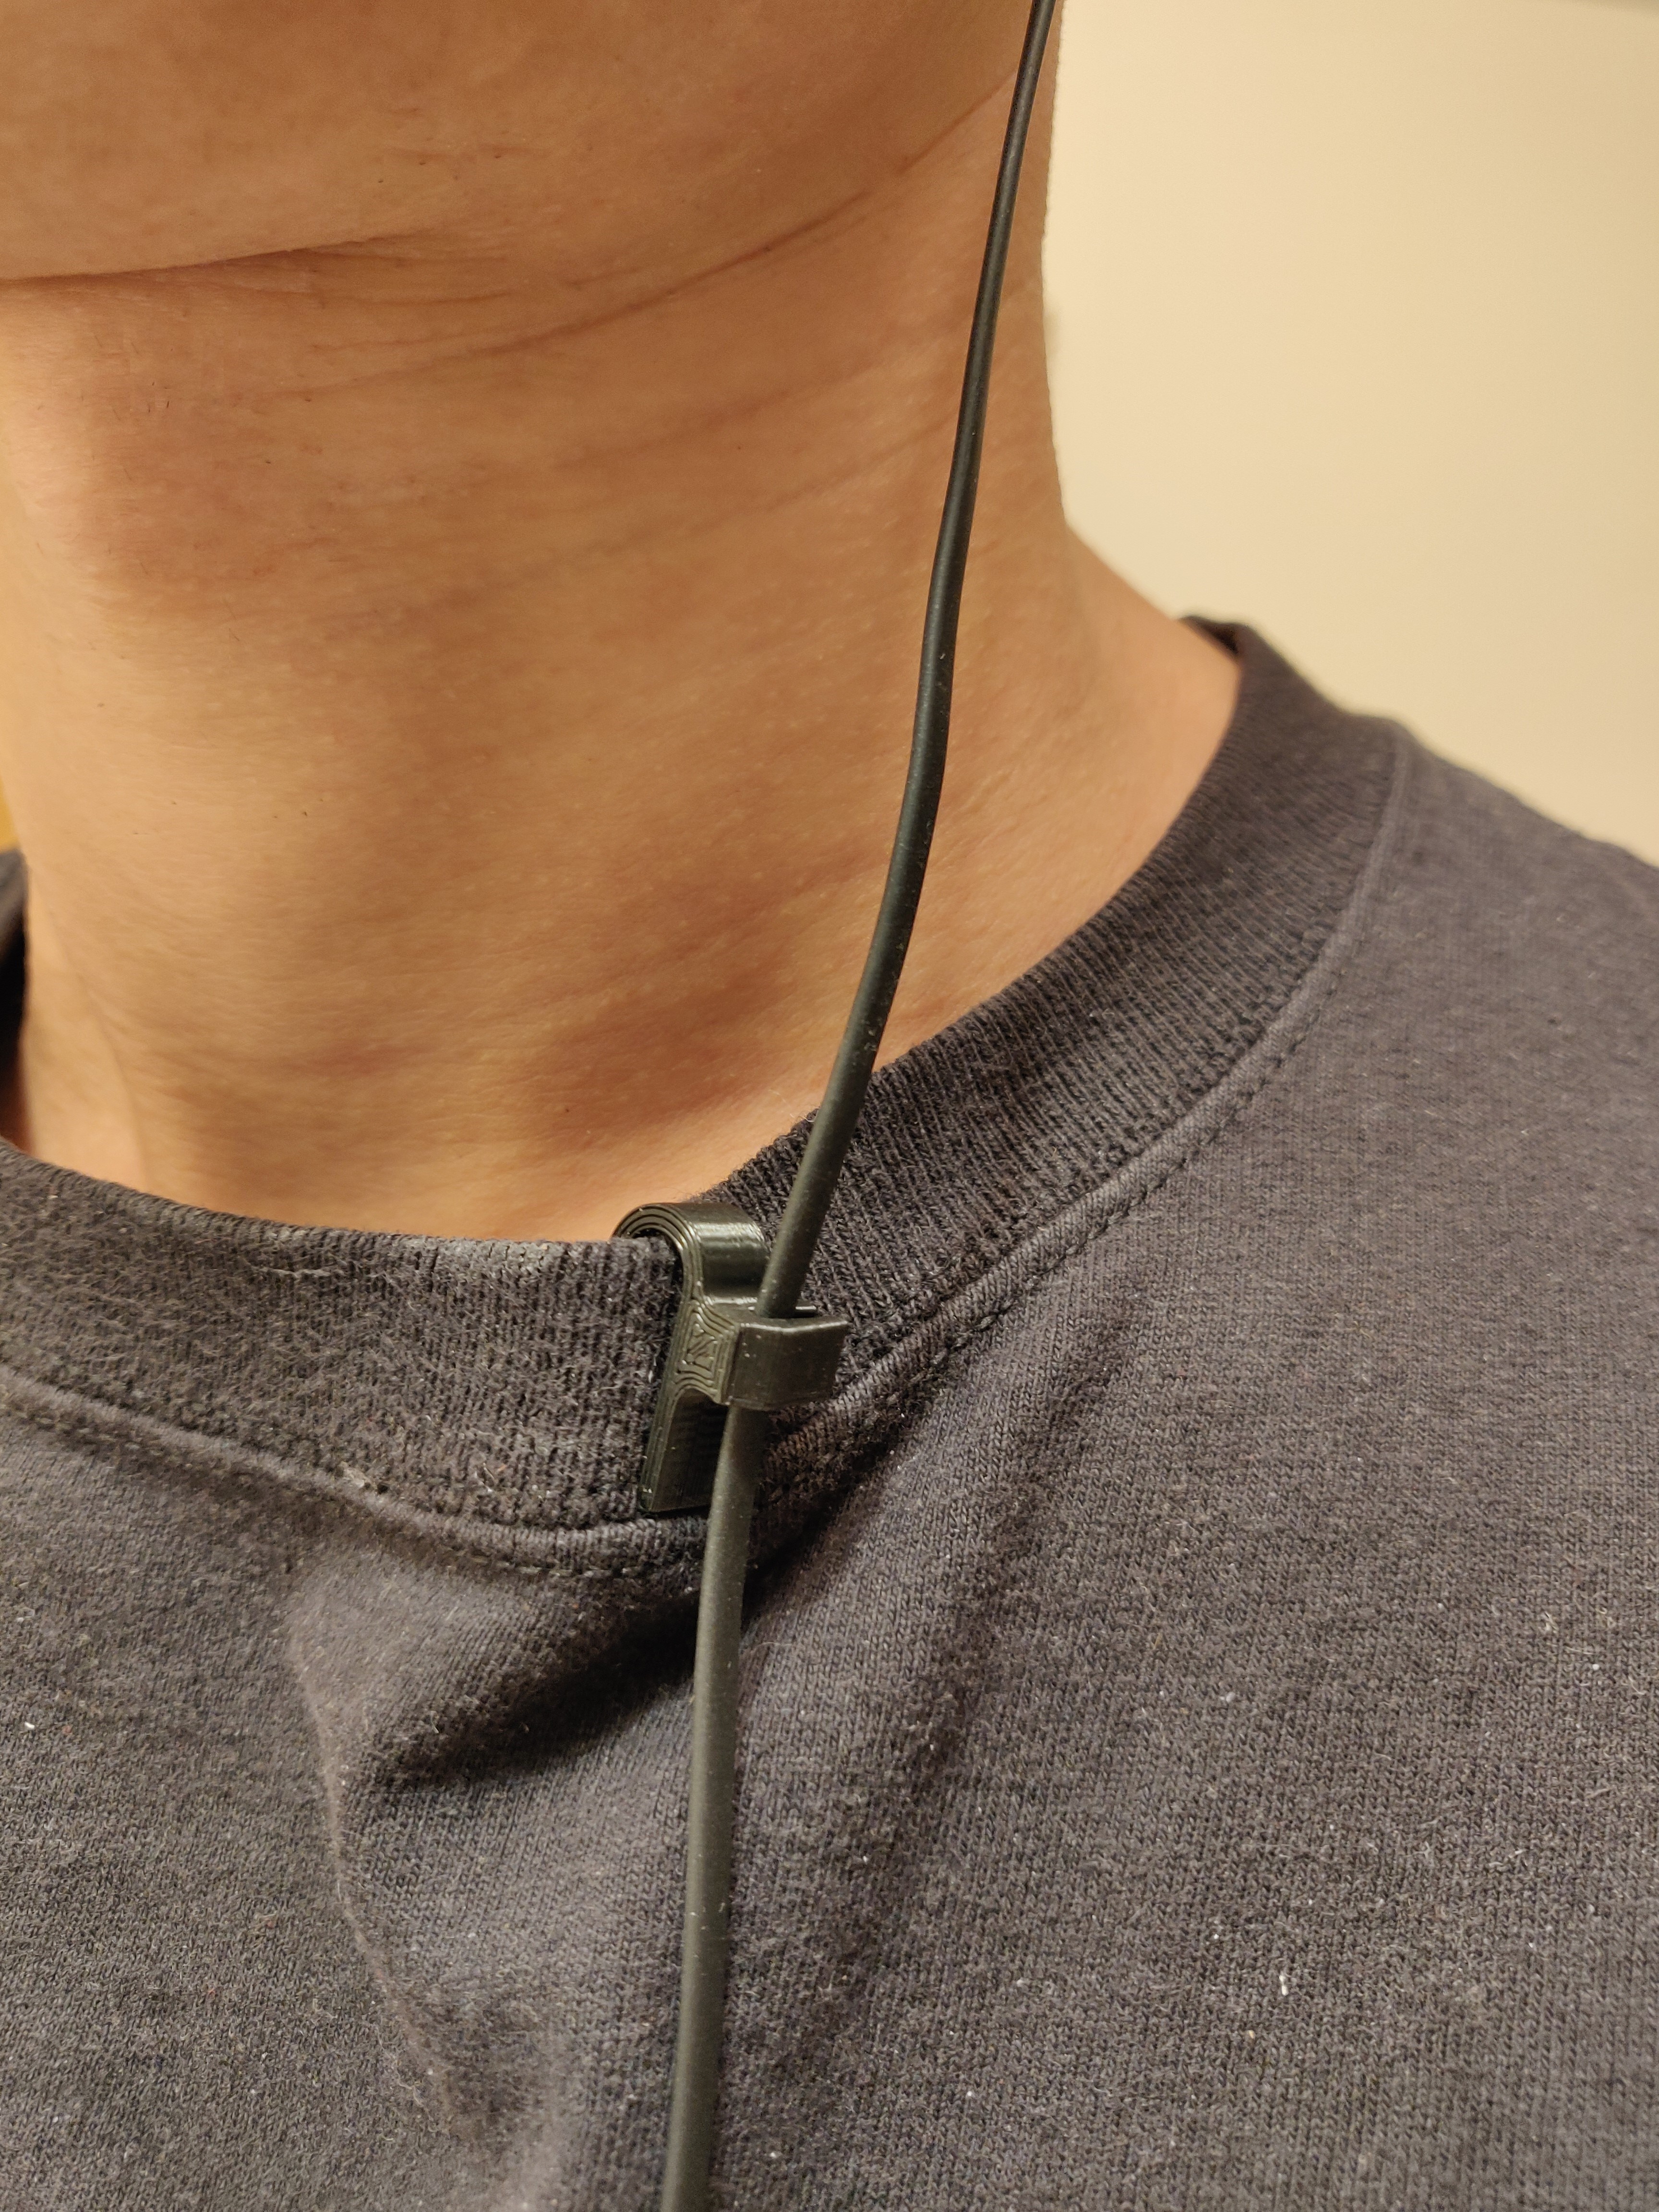 Earbud/headphone Shirt Clip